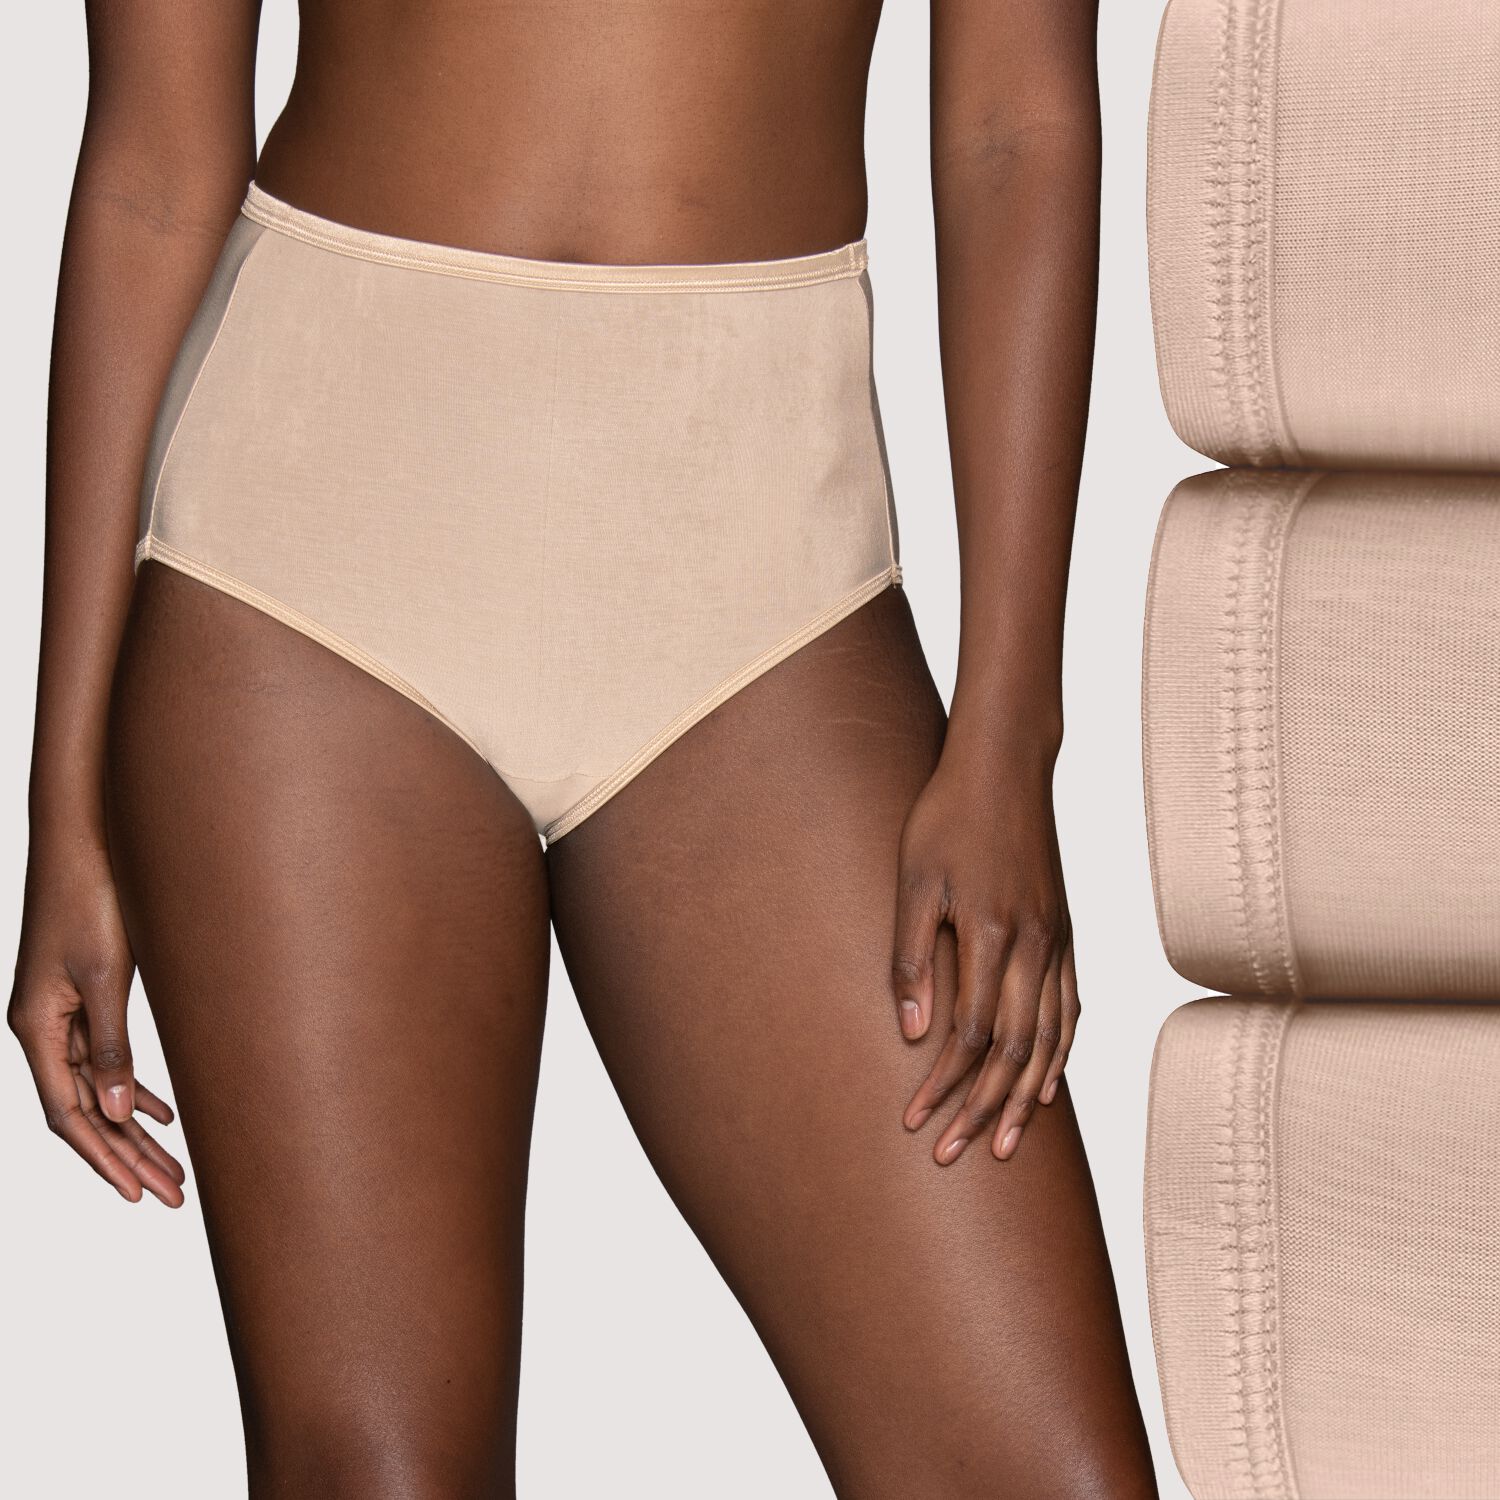 Custom Variety Pack 100% Nylon Panties for Women